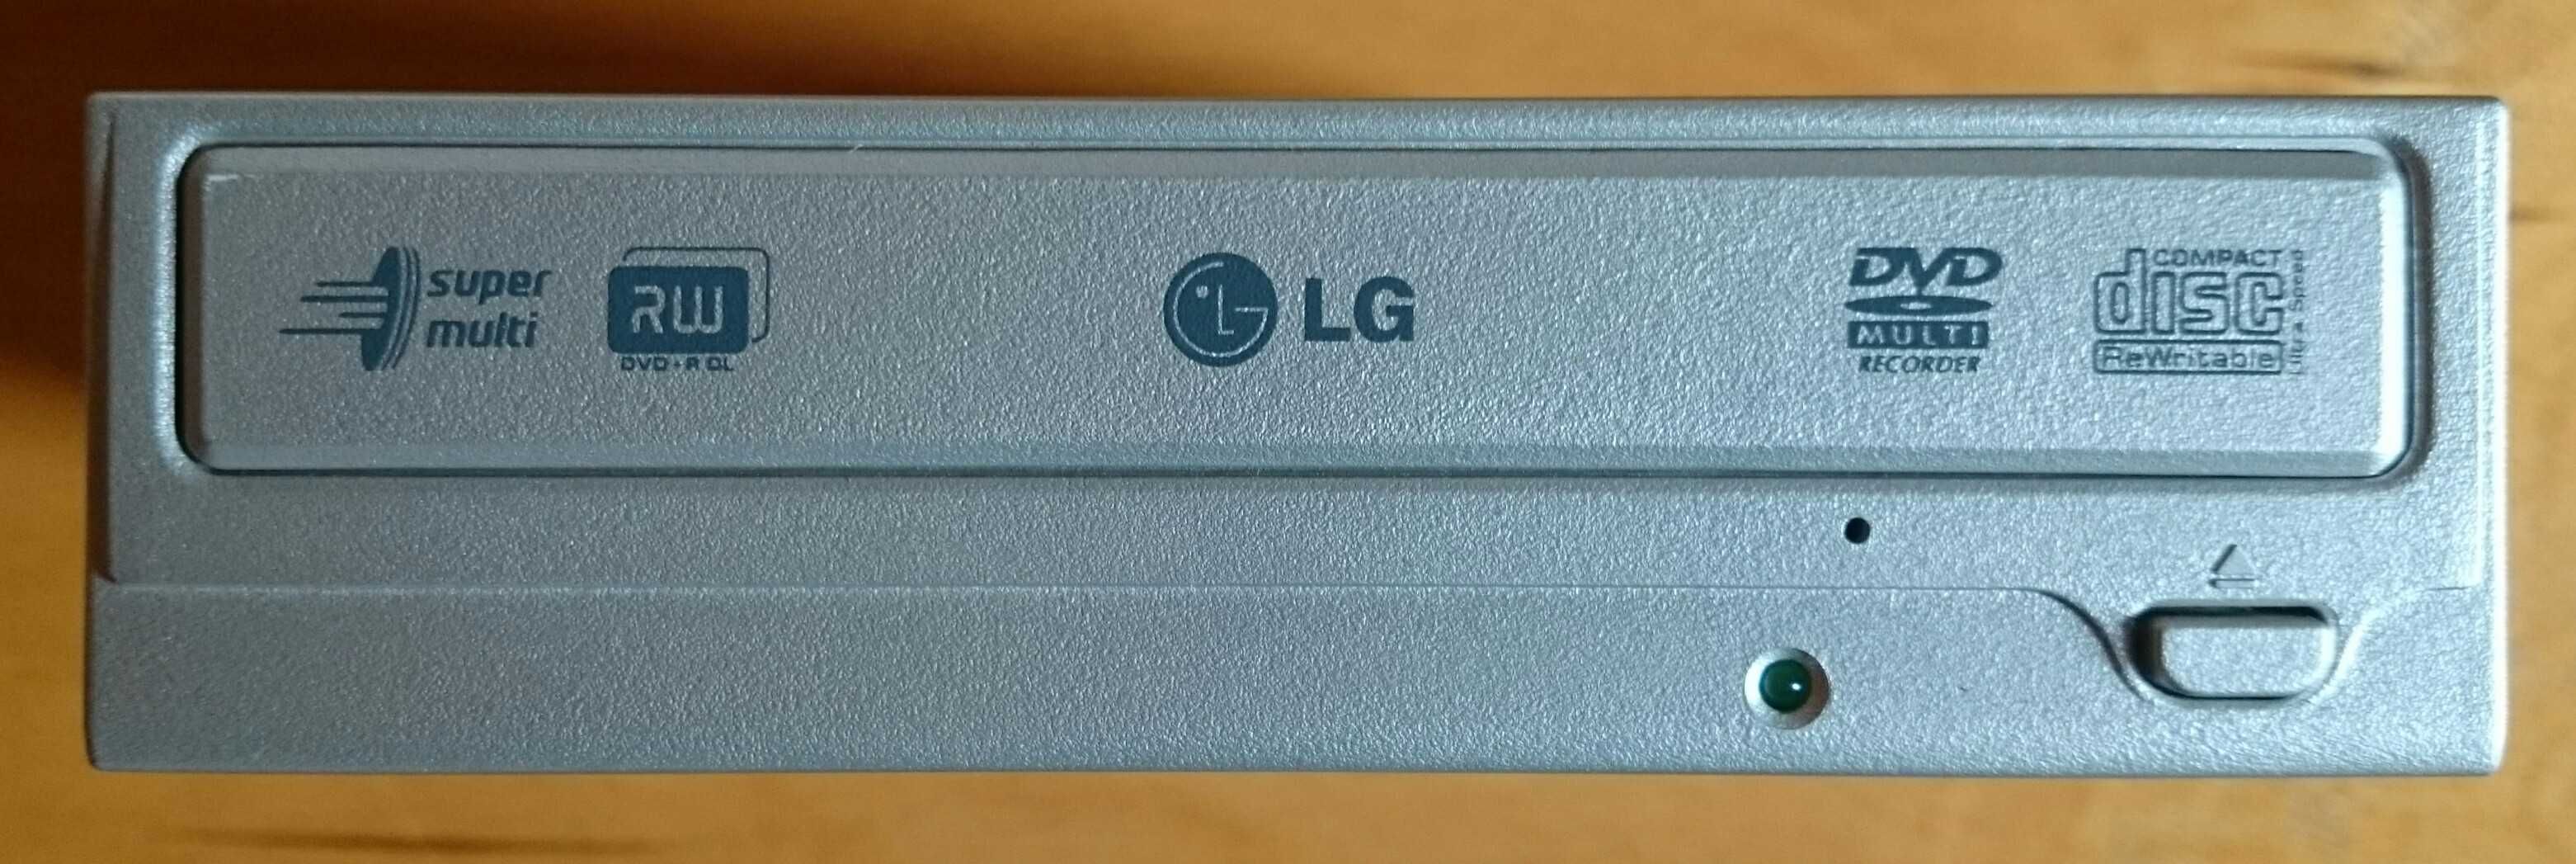 Дисковод, DVD ROM - LG gsa - s42n